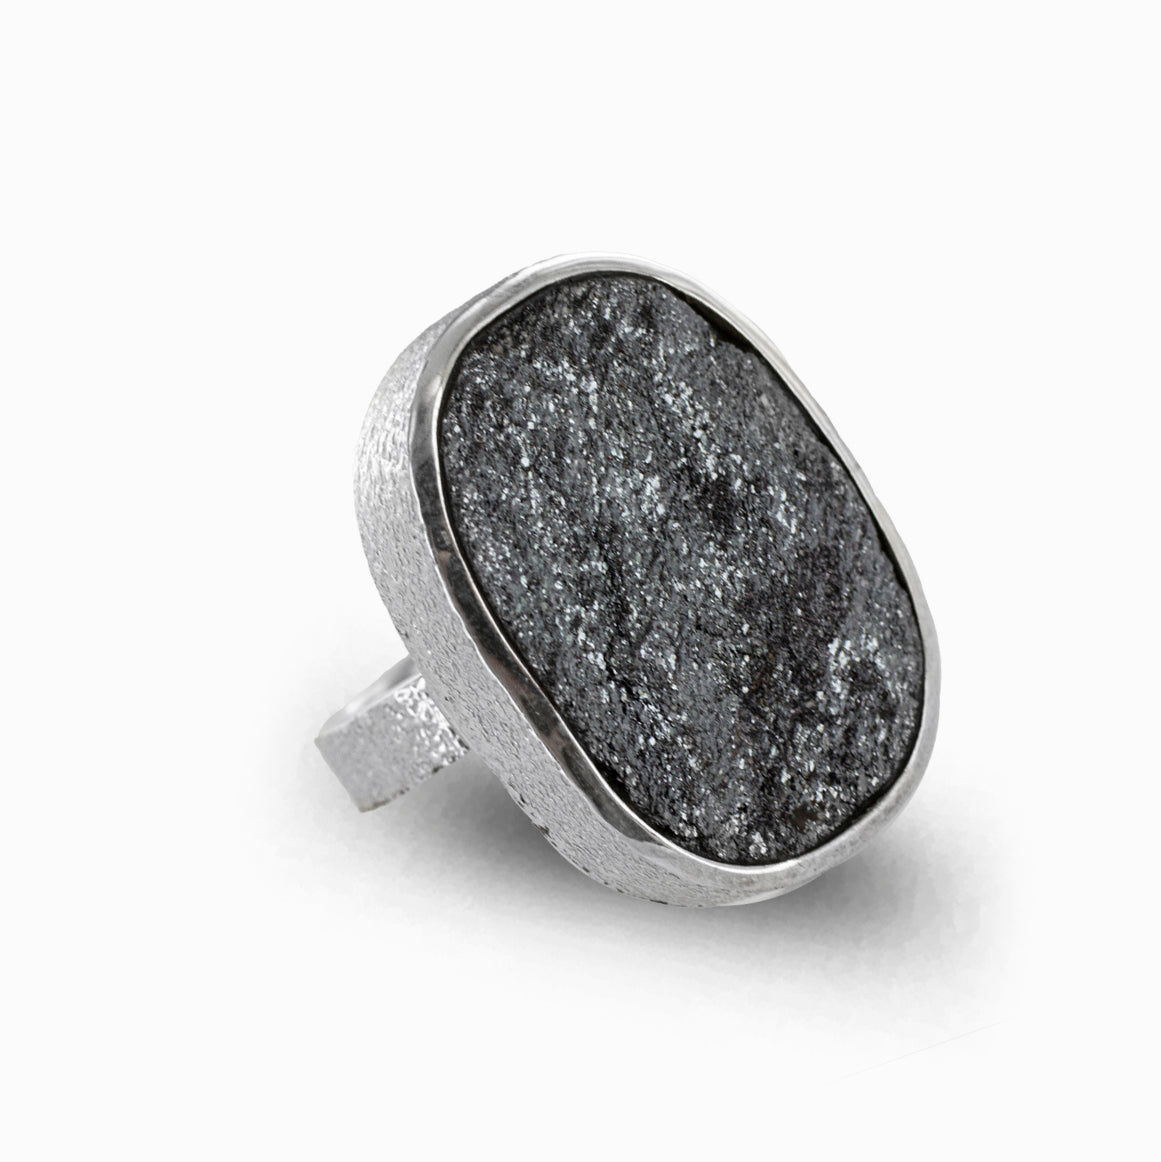 Specular Hematite Ring